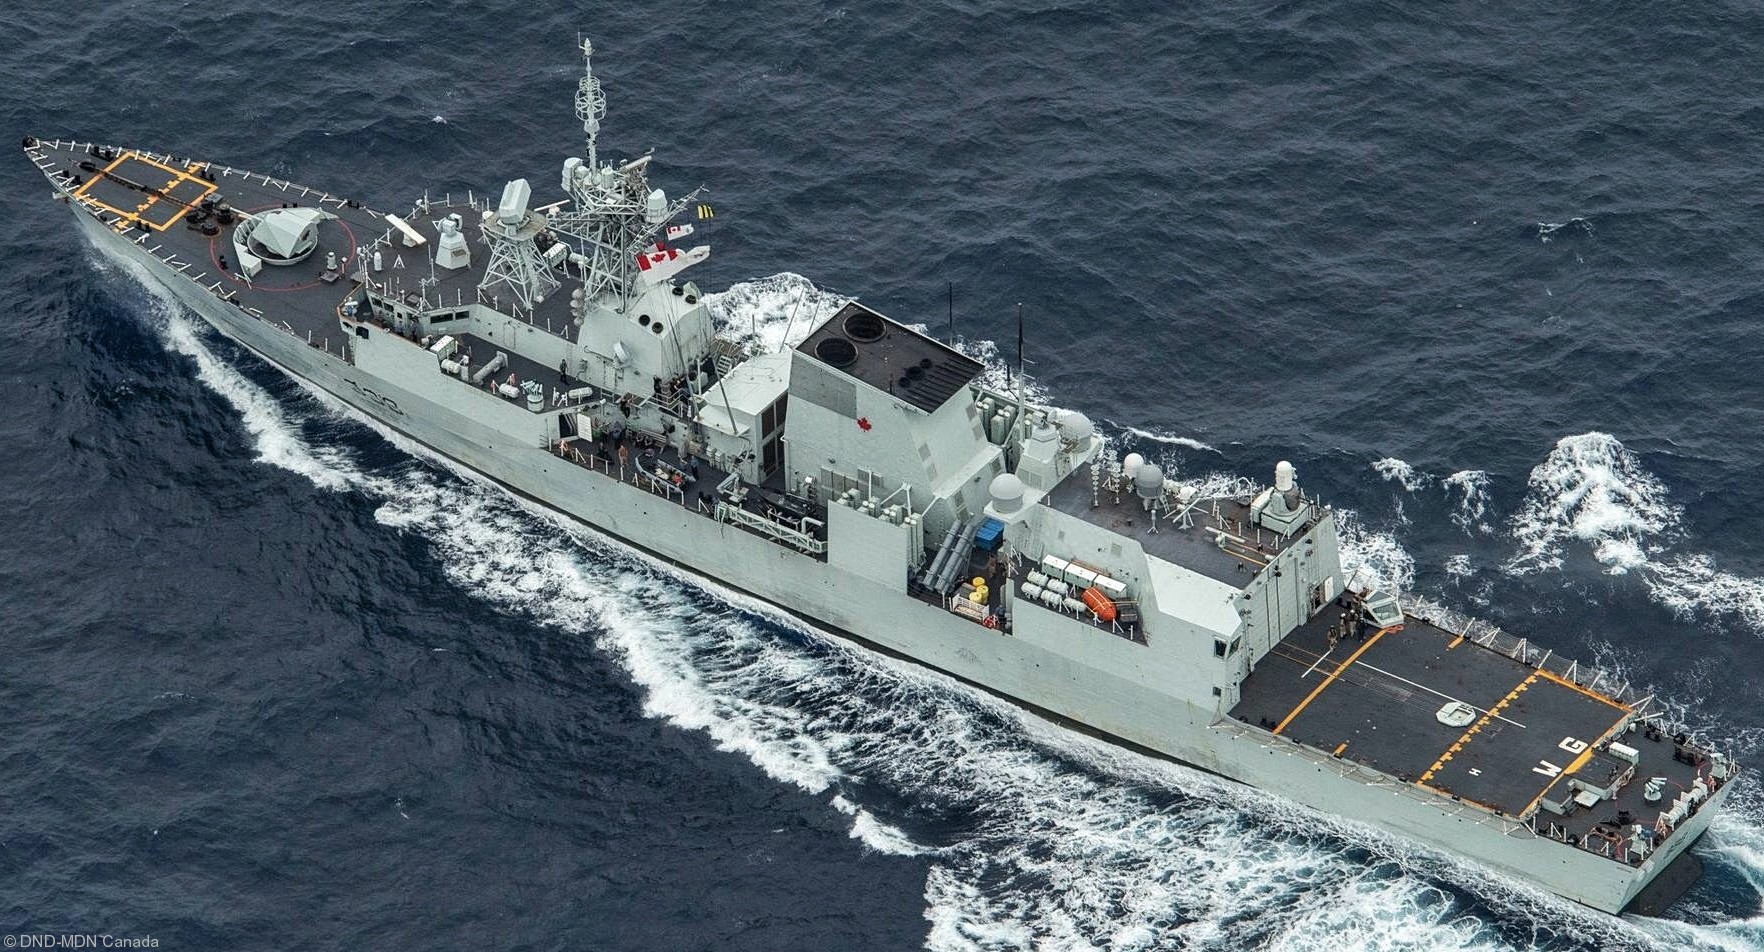 ffh-338 hmcs winnipeg halifax class helicopter patrol frigate ncsm royal canadian navy 48